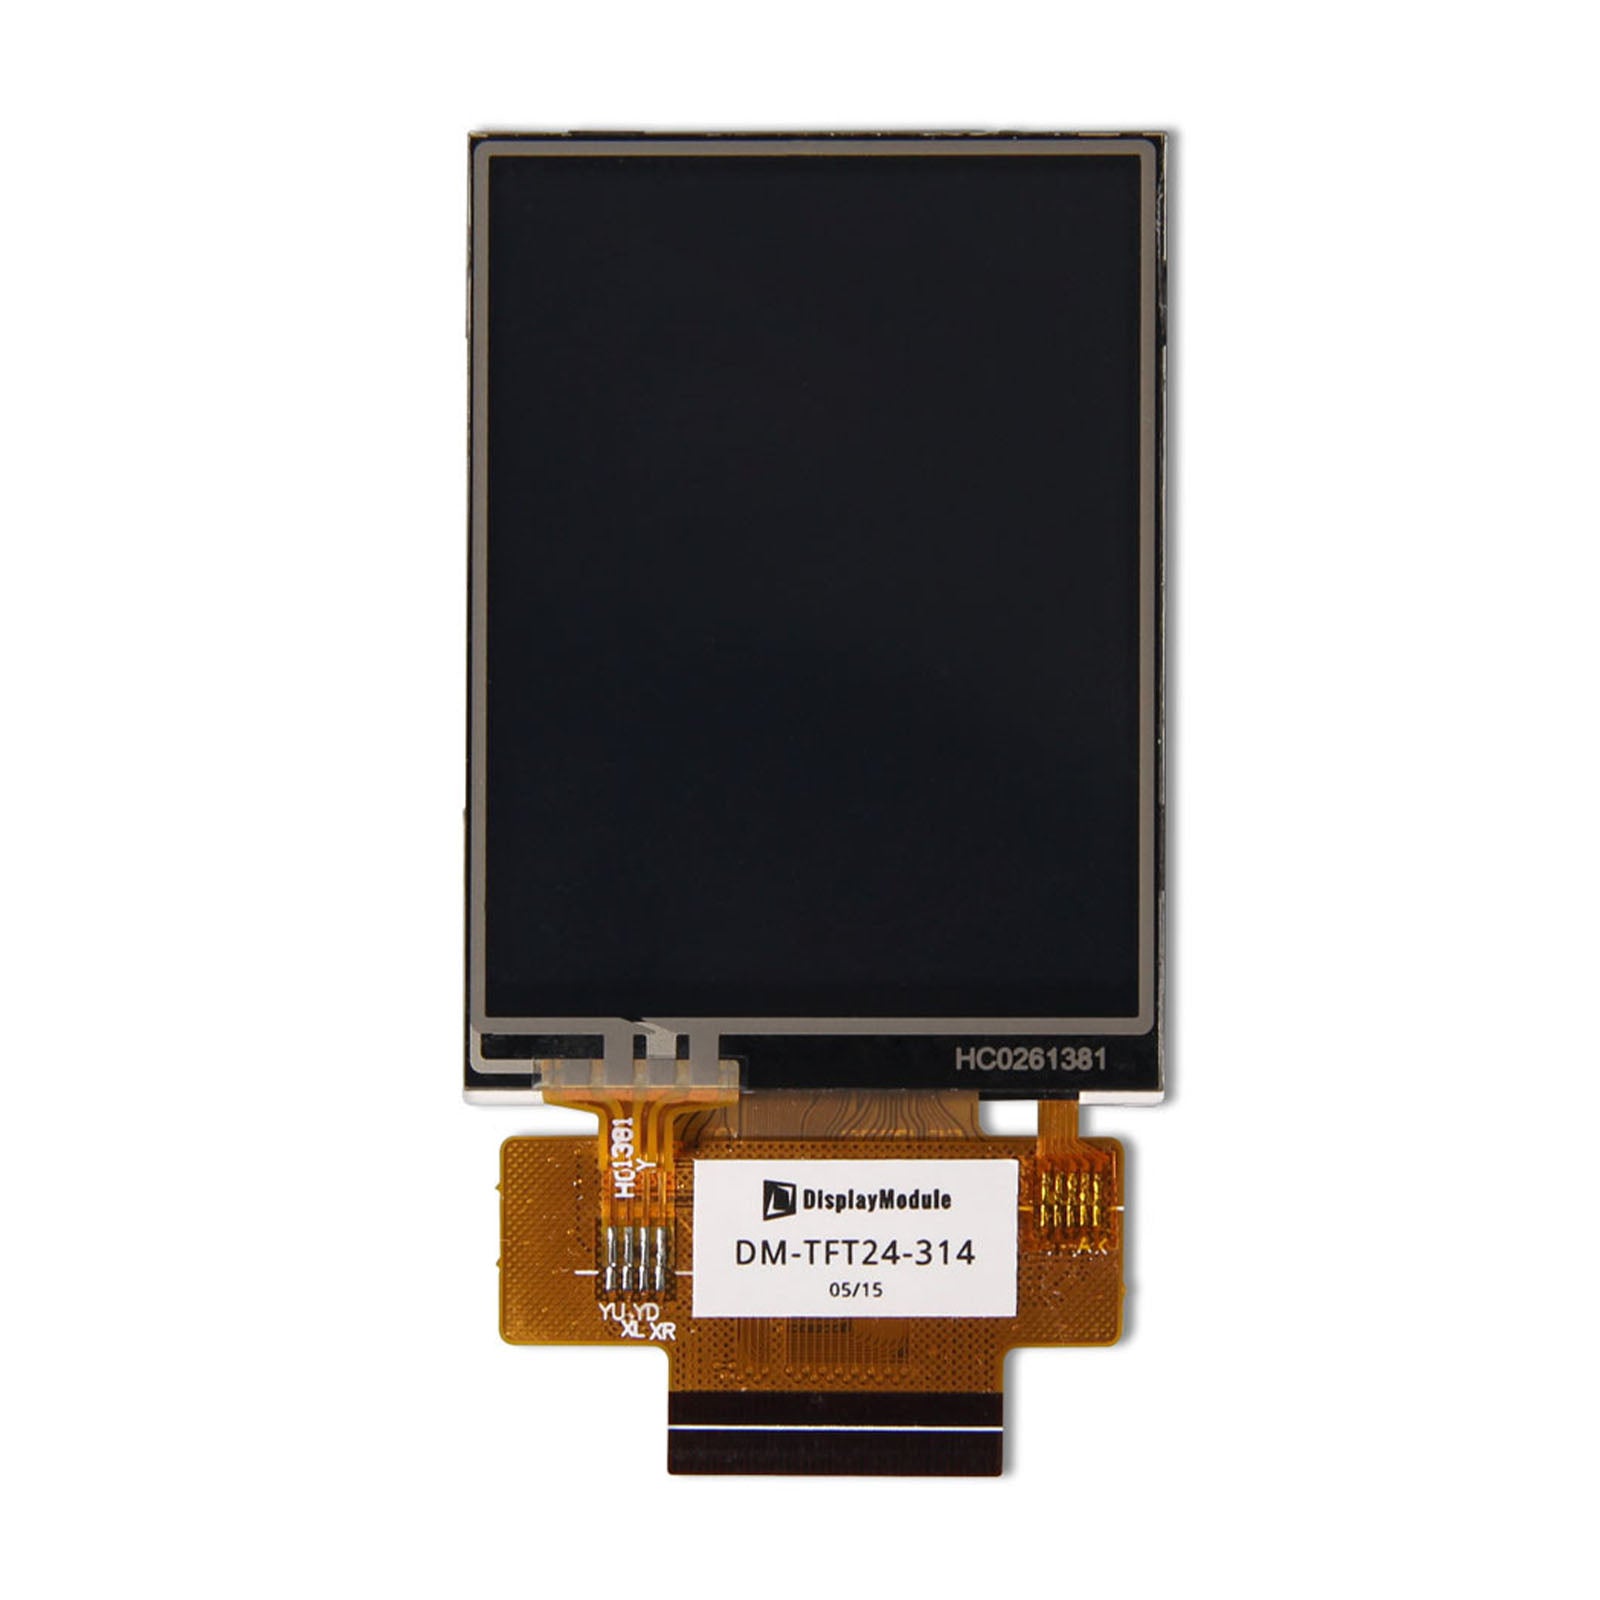 DisplayModule 2.4" 240x320 TFT LCD Display Panel (ILI9341) With Resistive Touch - MCU